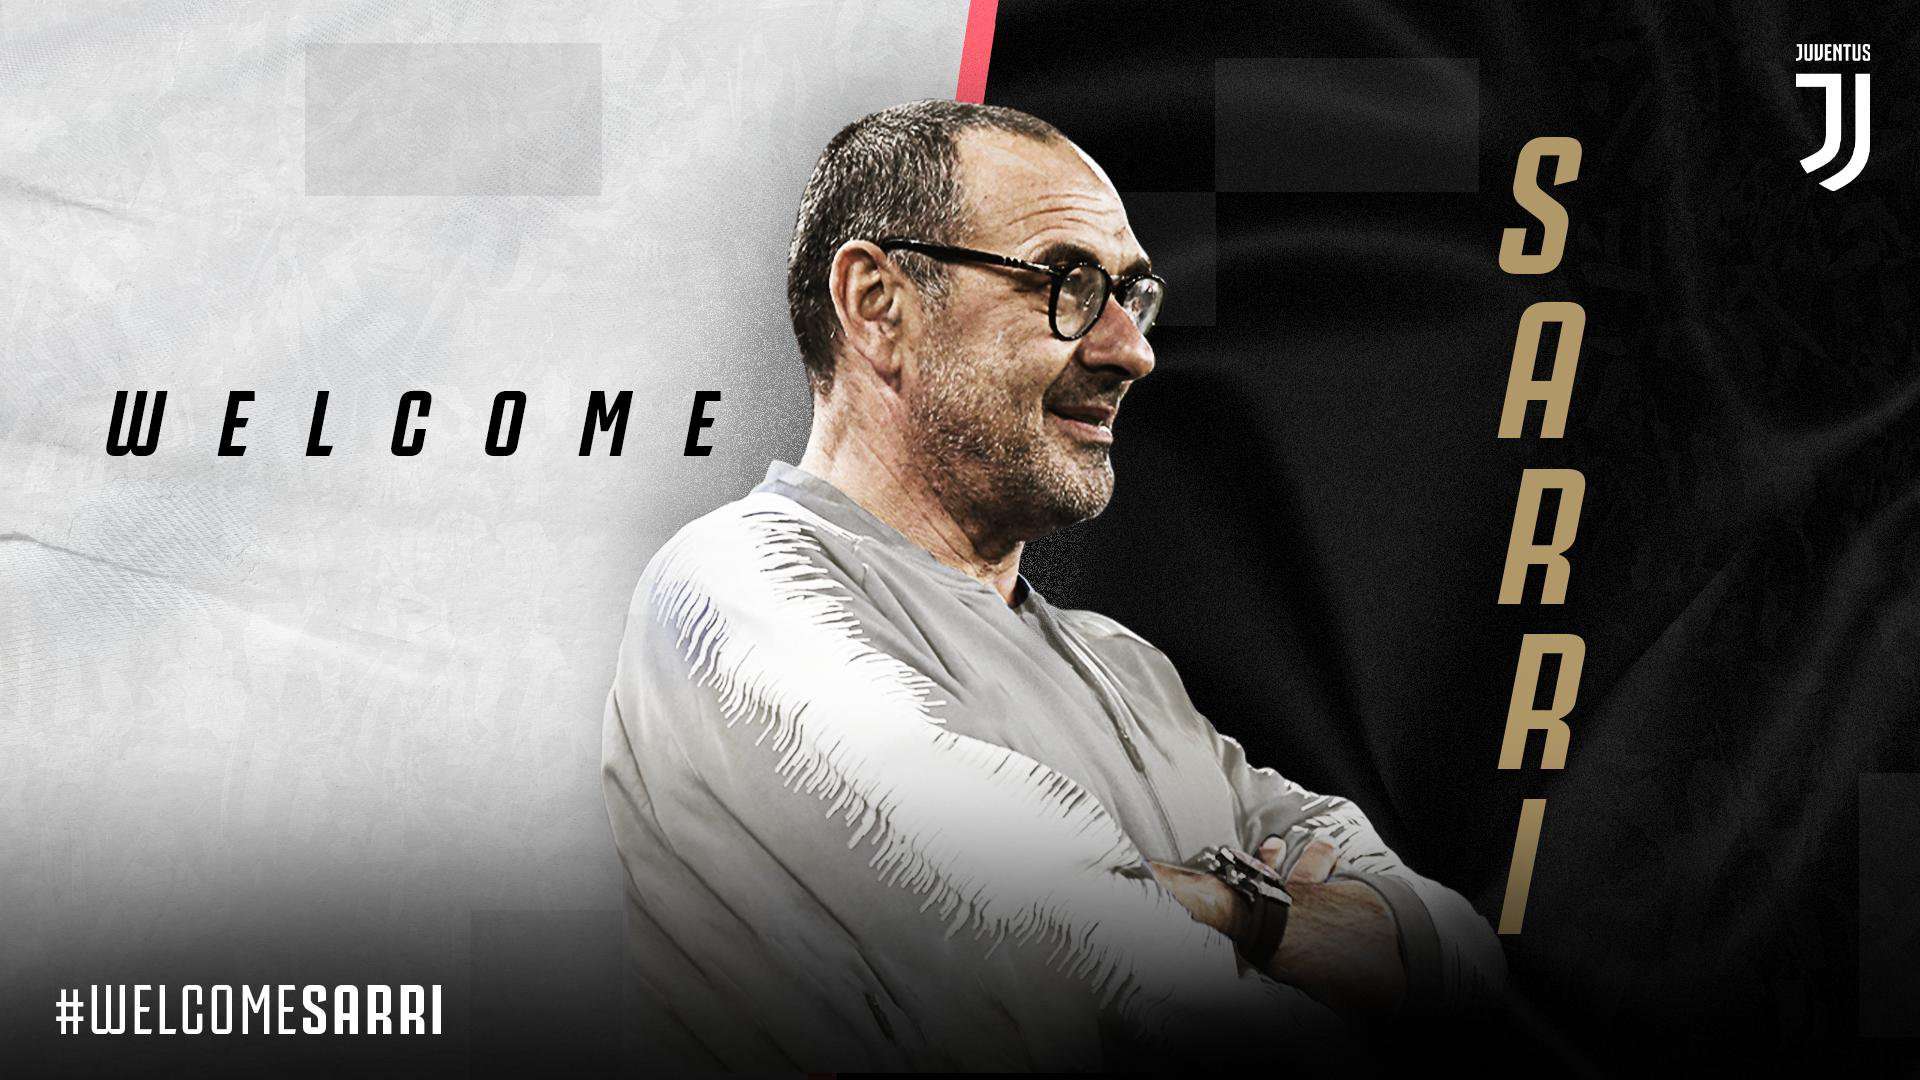 image for Maurizio Sarri is the new Juventus coach. #WelcomeSarri ➡️ https://t.co/ur5ixeCoQn… "